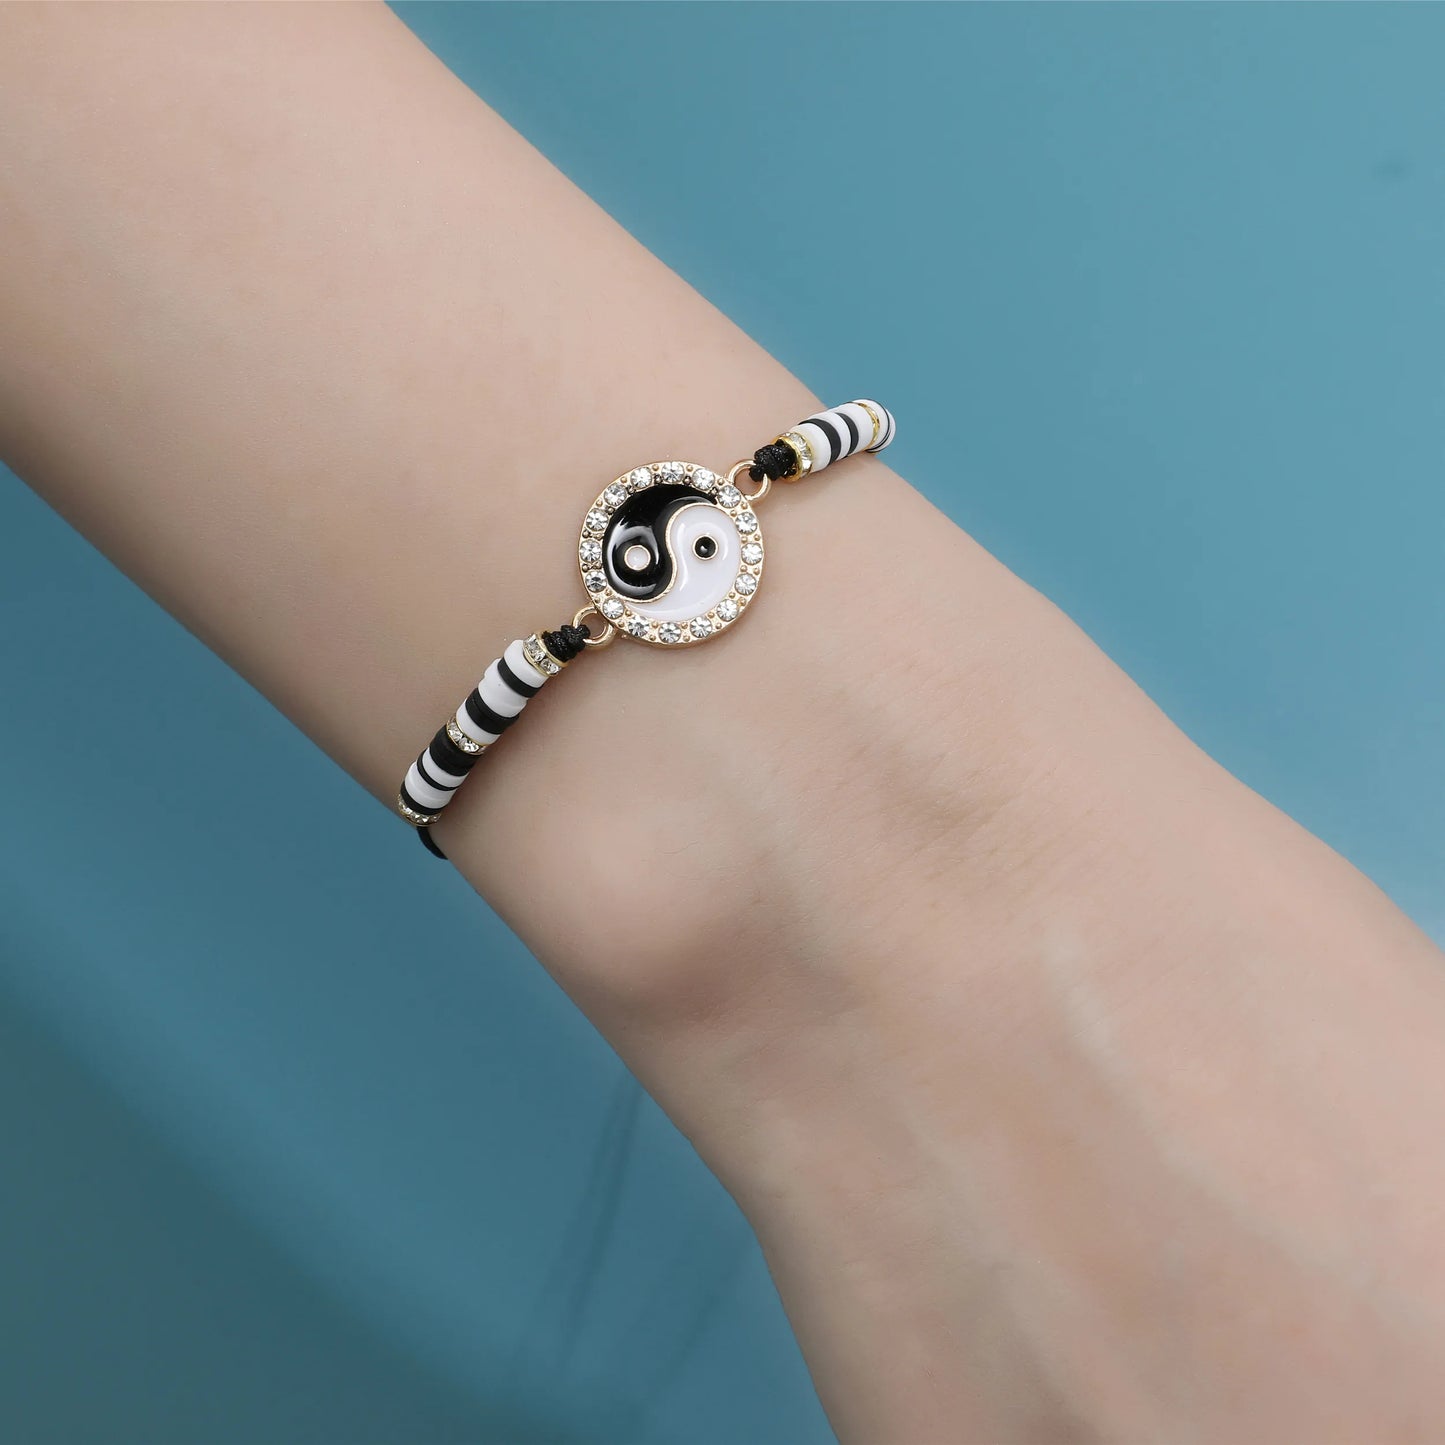 12pcs Black/white Yin Yang Tai Chi Pendant Soft Clay Braided Bracelets Good Luck Charm Adjustable Bracelet